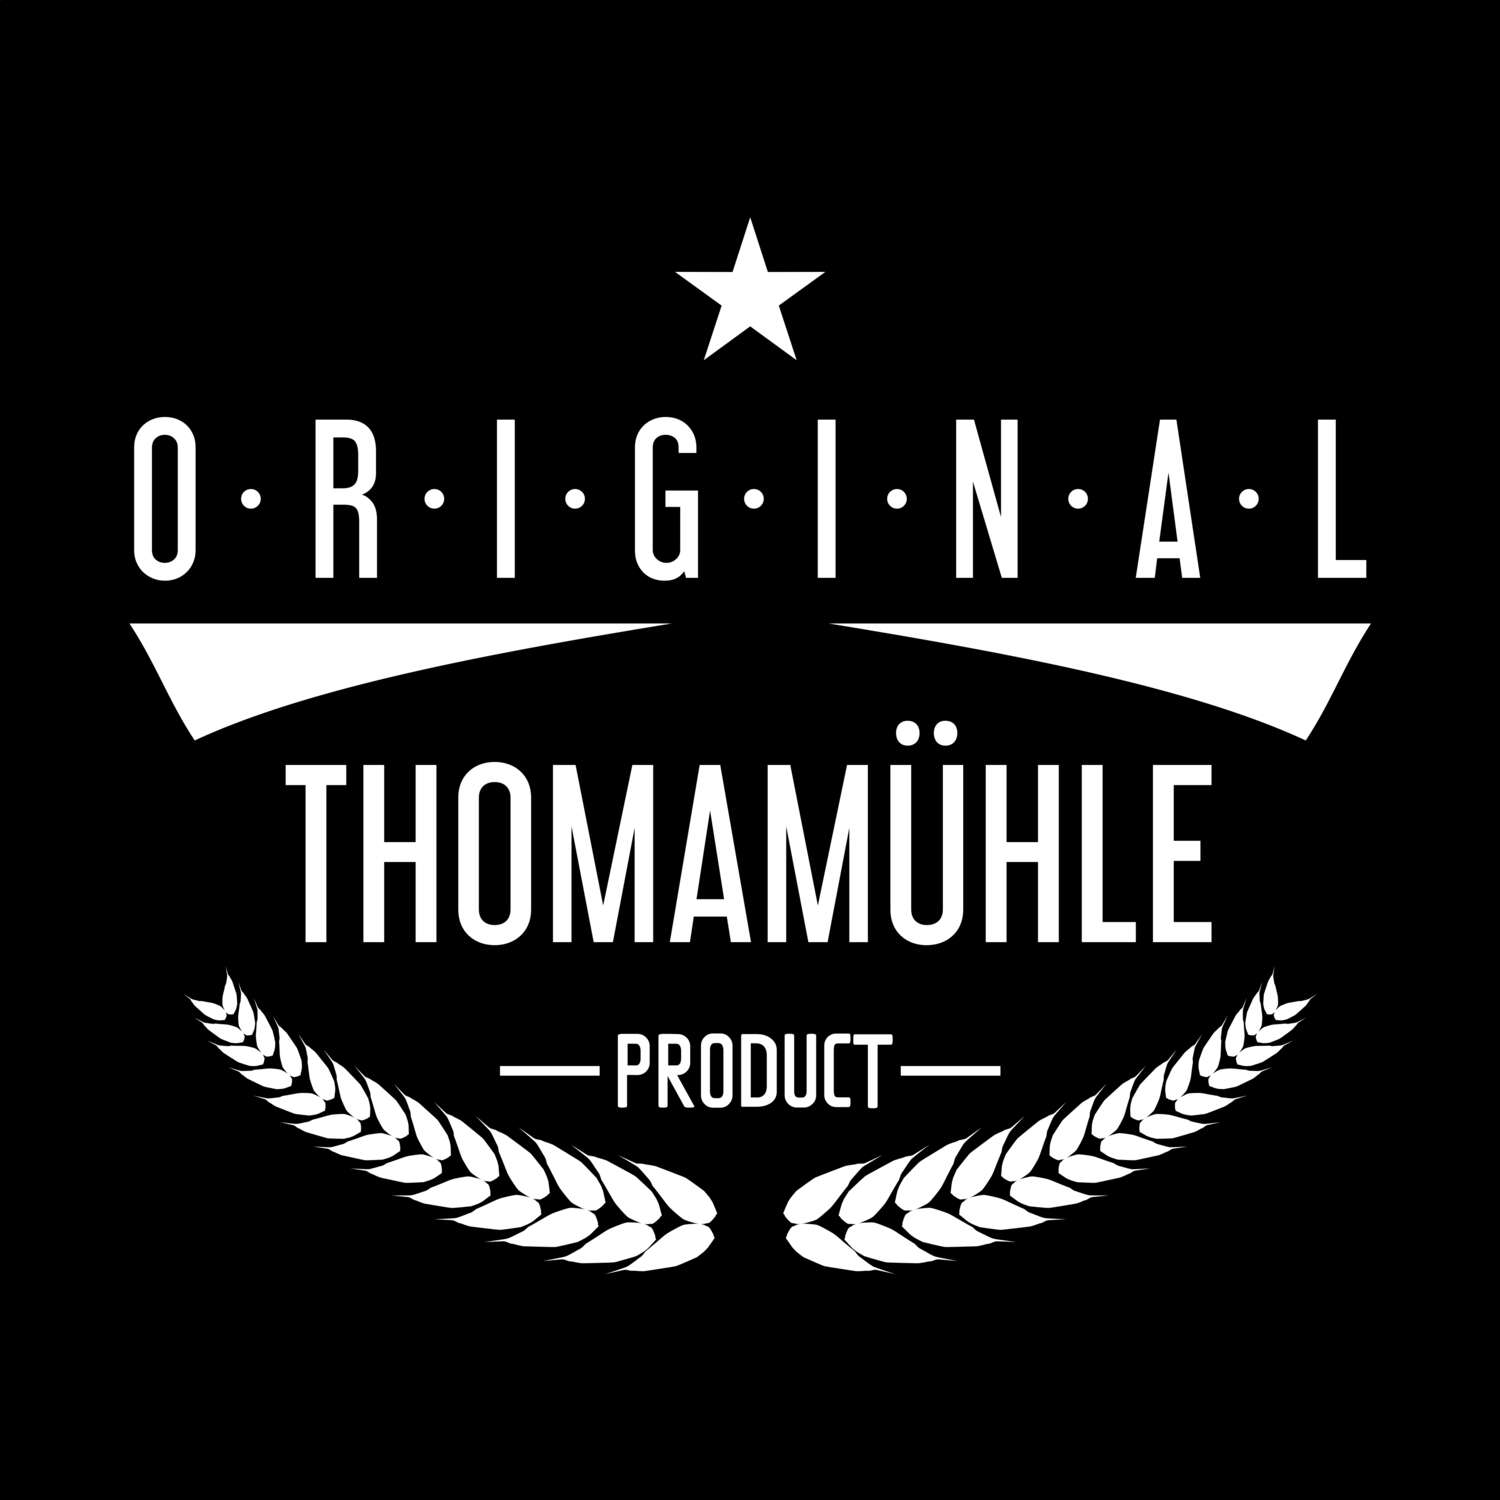 Thomamühle T-Shirt »Original Product«